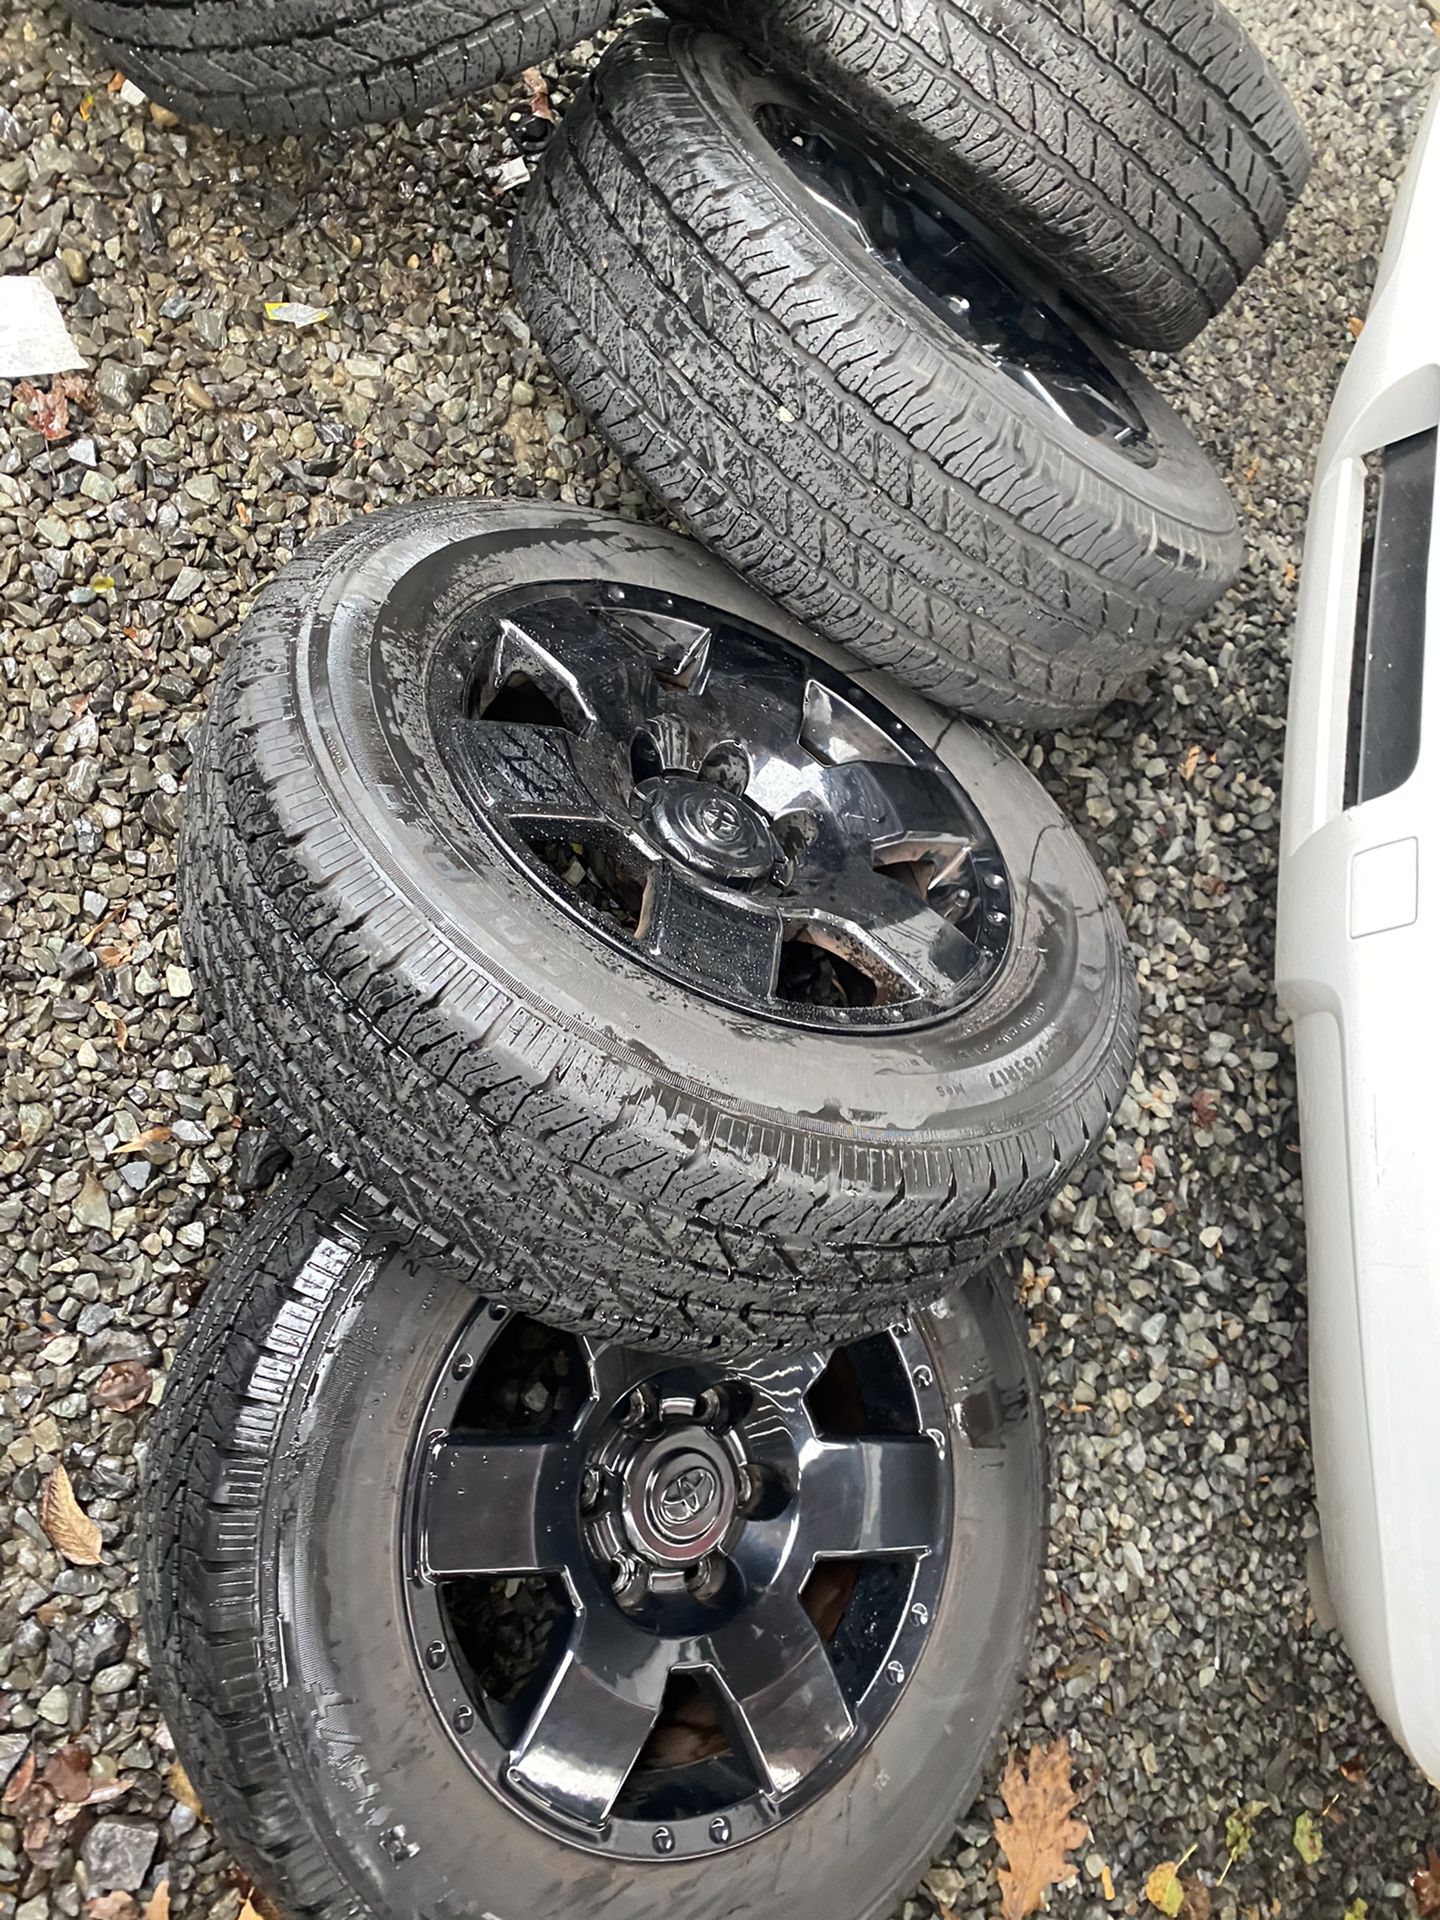 Fj cruiser Toyota Tacoma wheels and tires